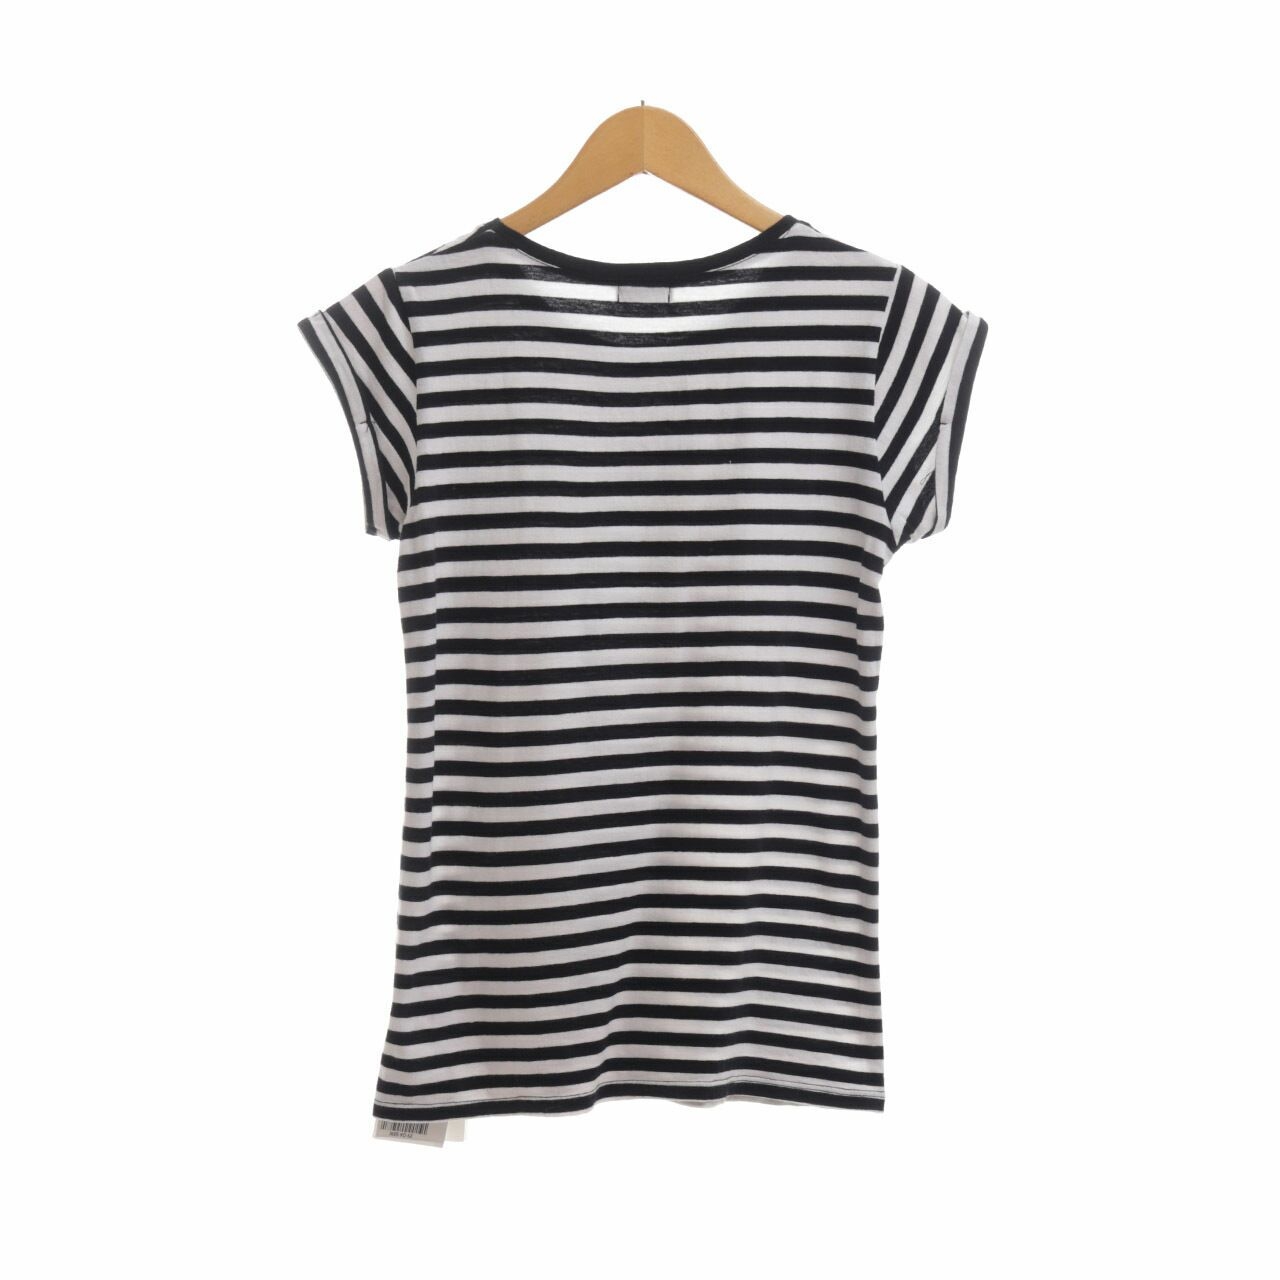 Dotti Black & White Stripes T-shirt